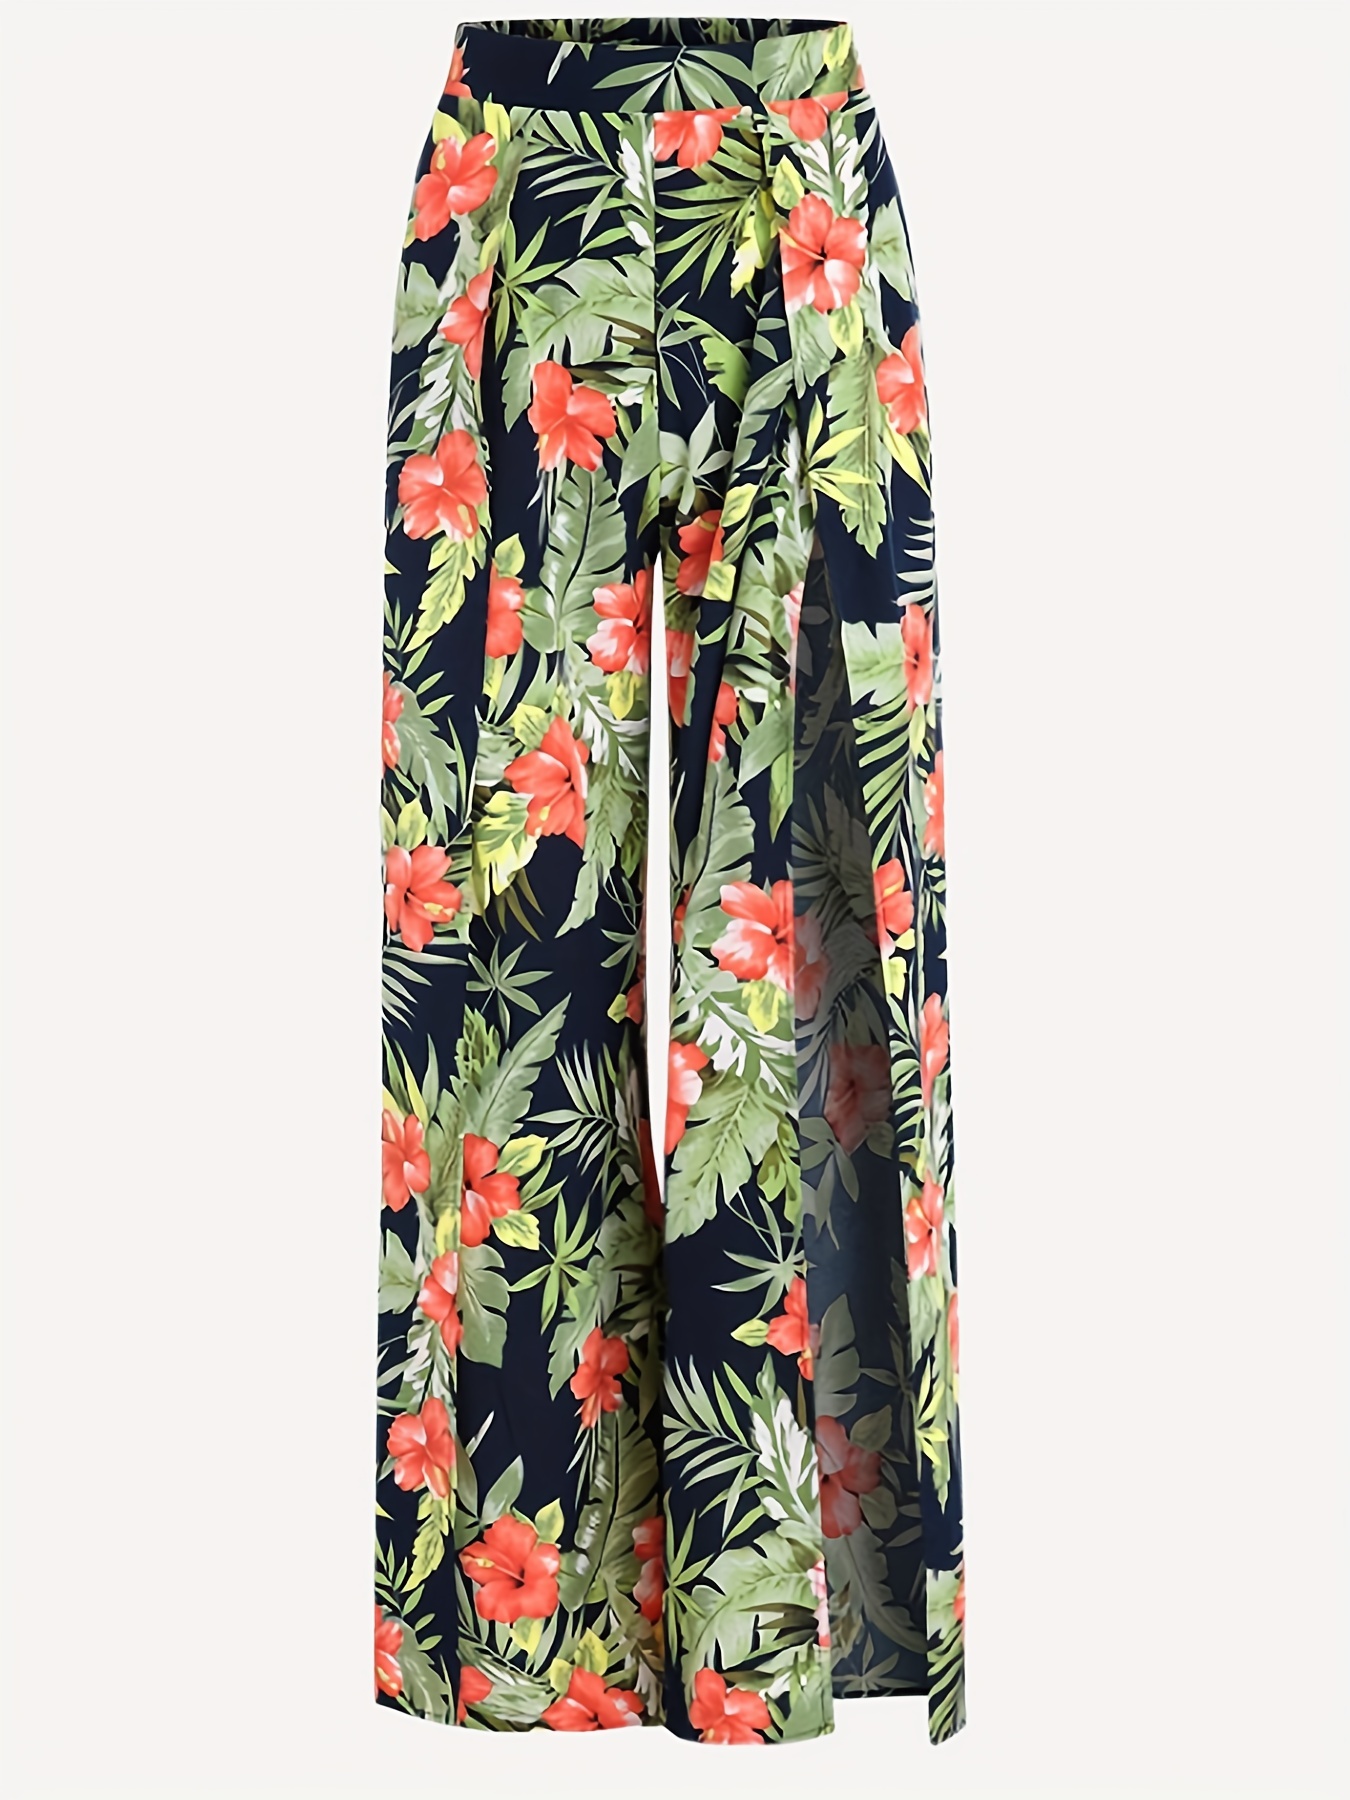 Boho Tropical Print Two-piece Set, Off Shoulder Crop Top & Split Pants  Outfits, Women's Clothing